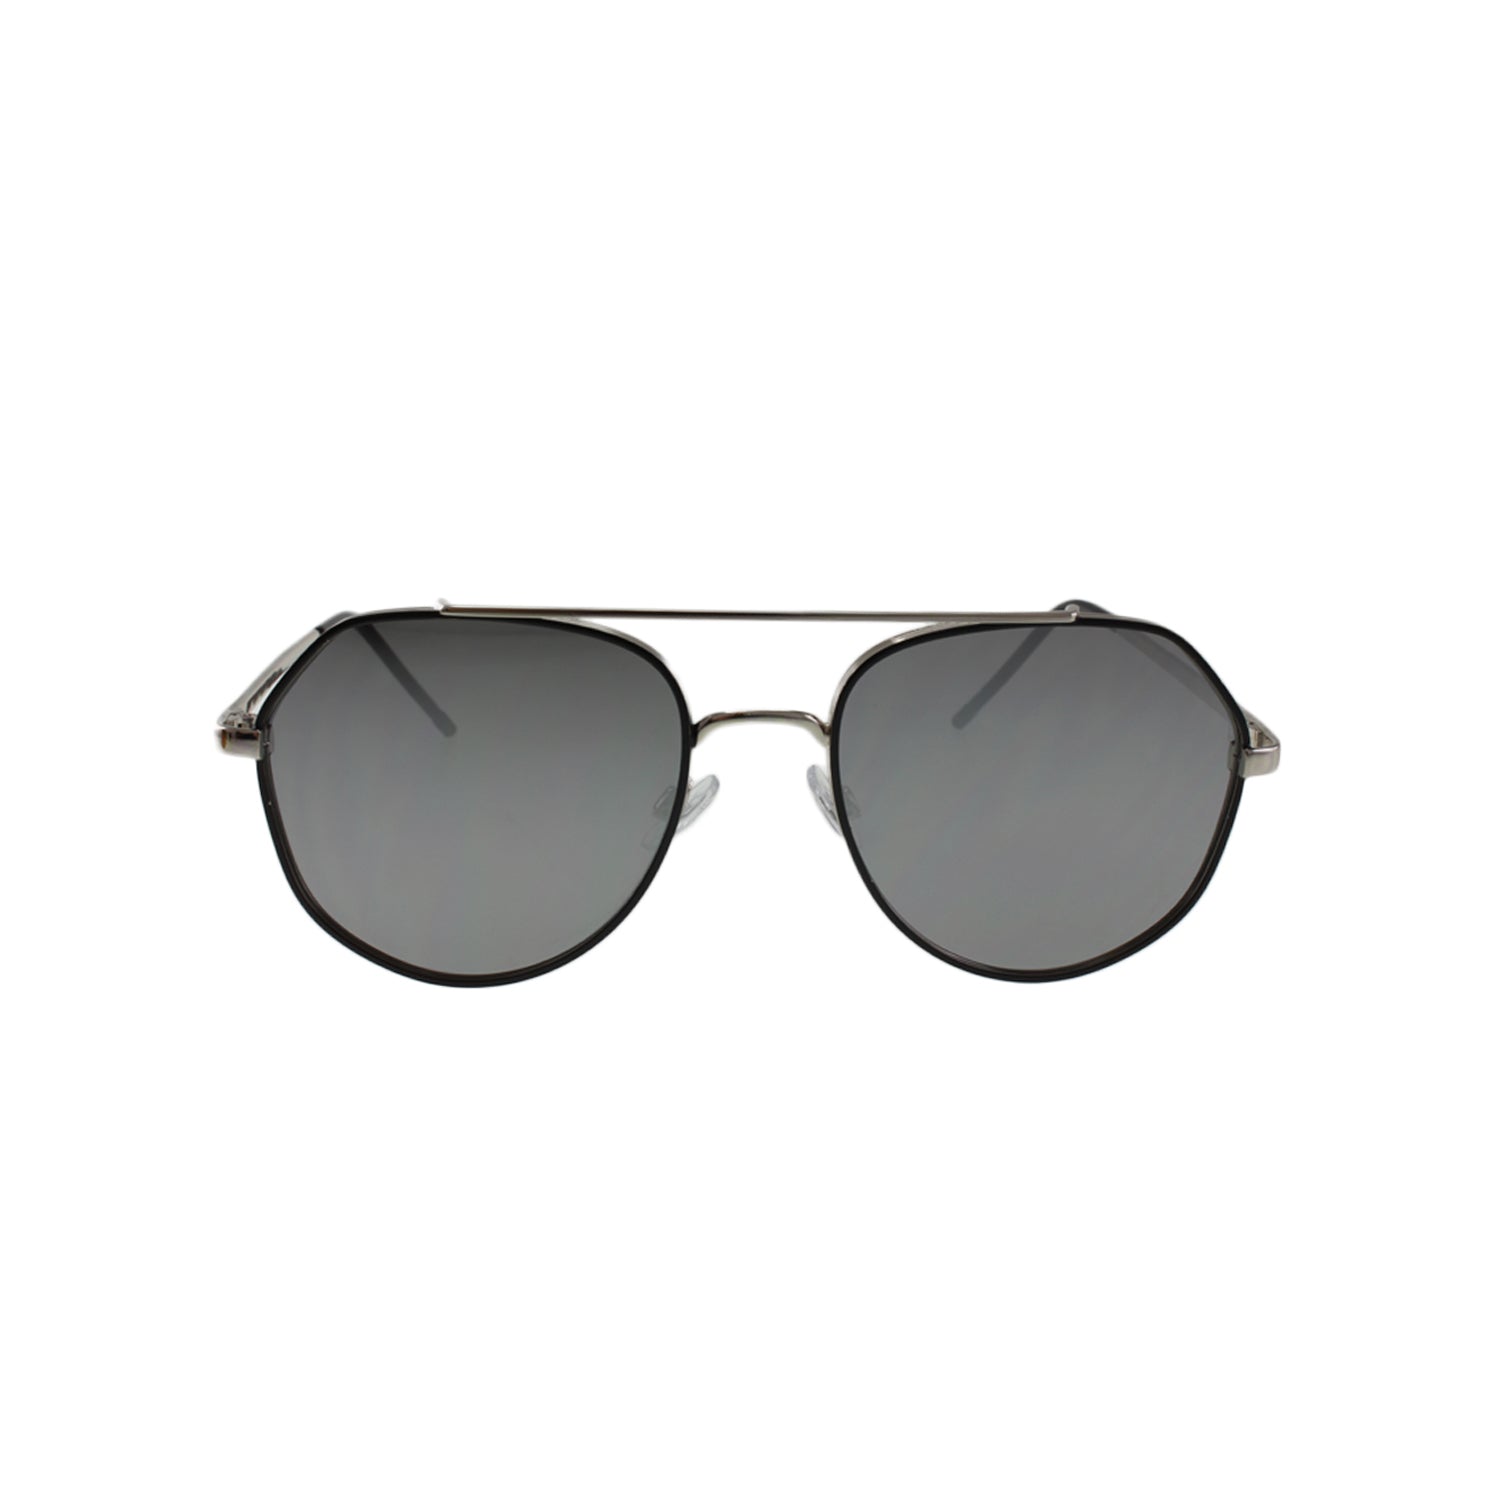 Jase New York Biltmore Sunglasses in Silver